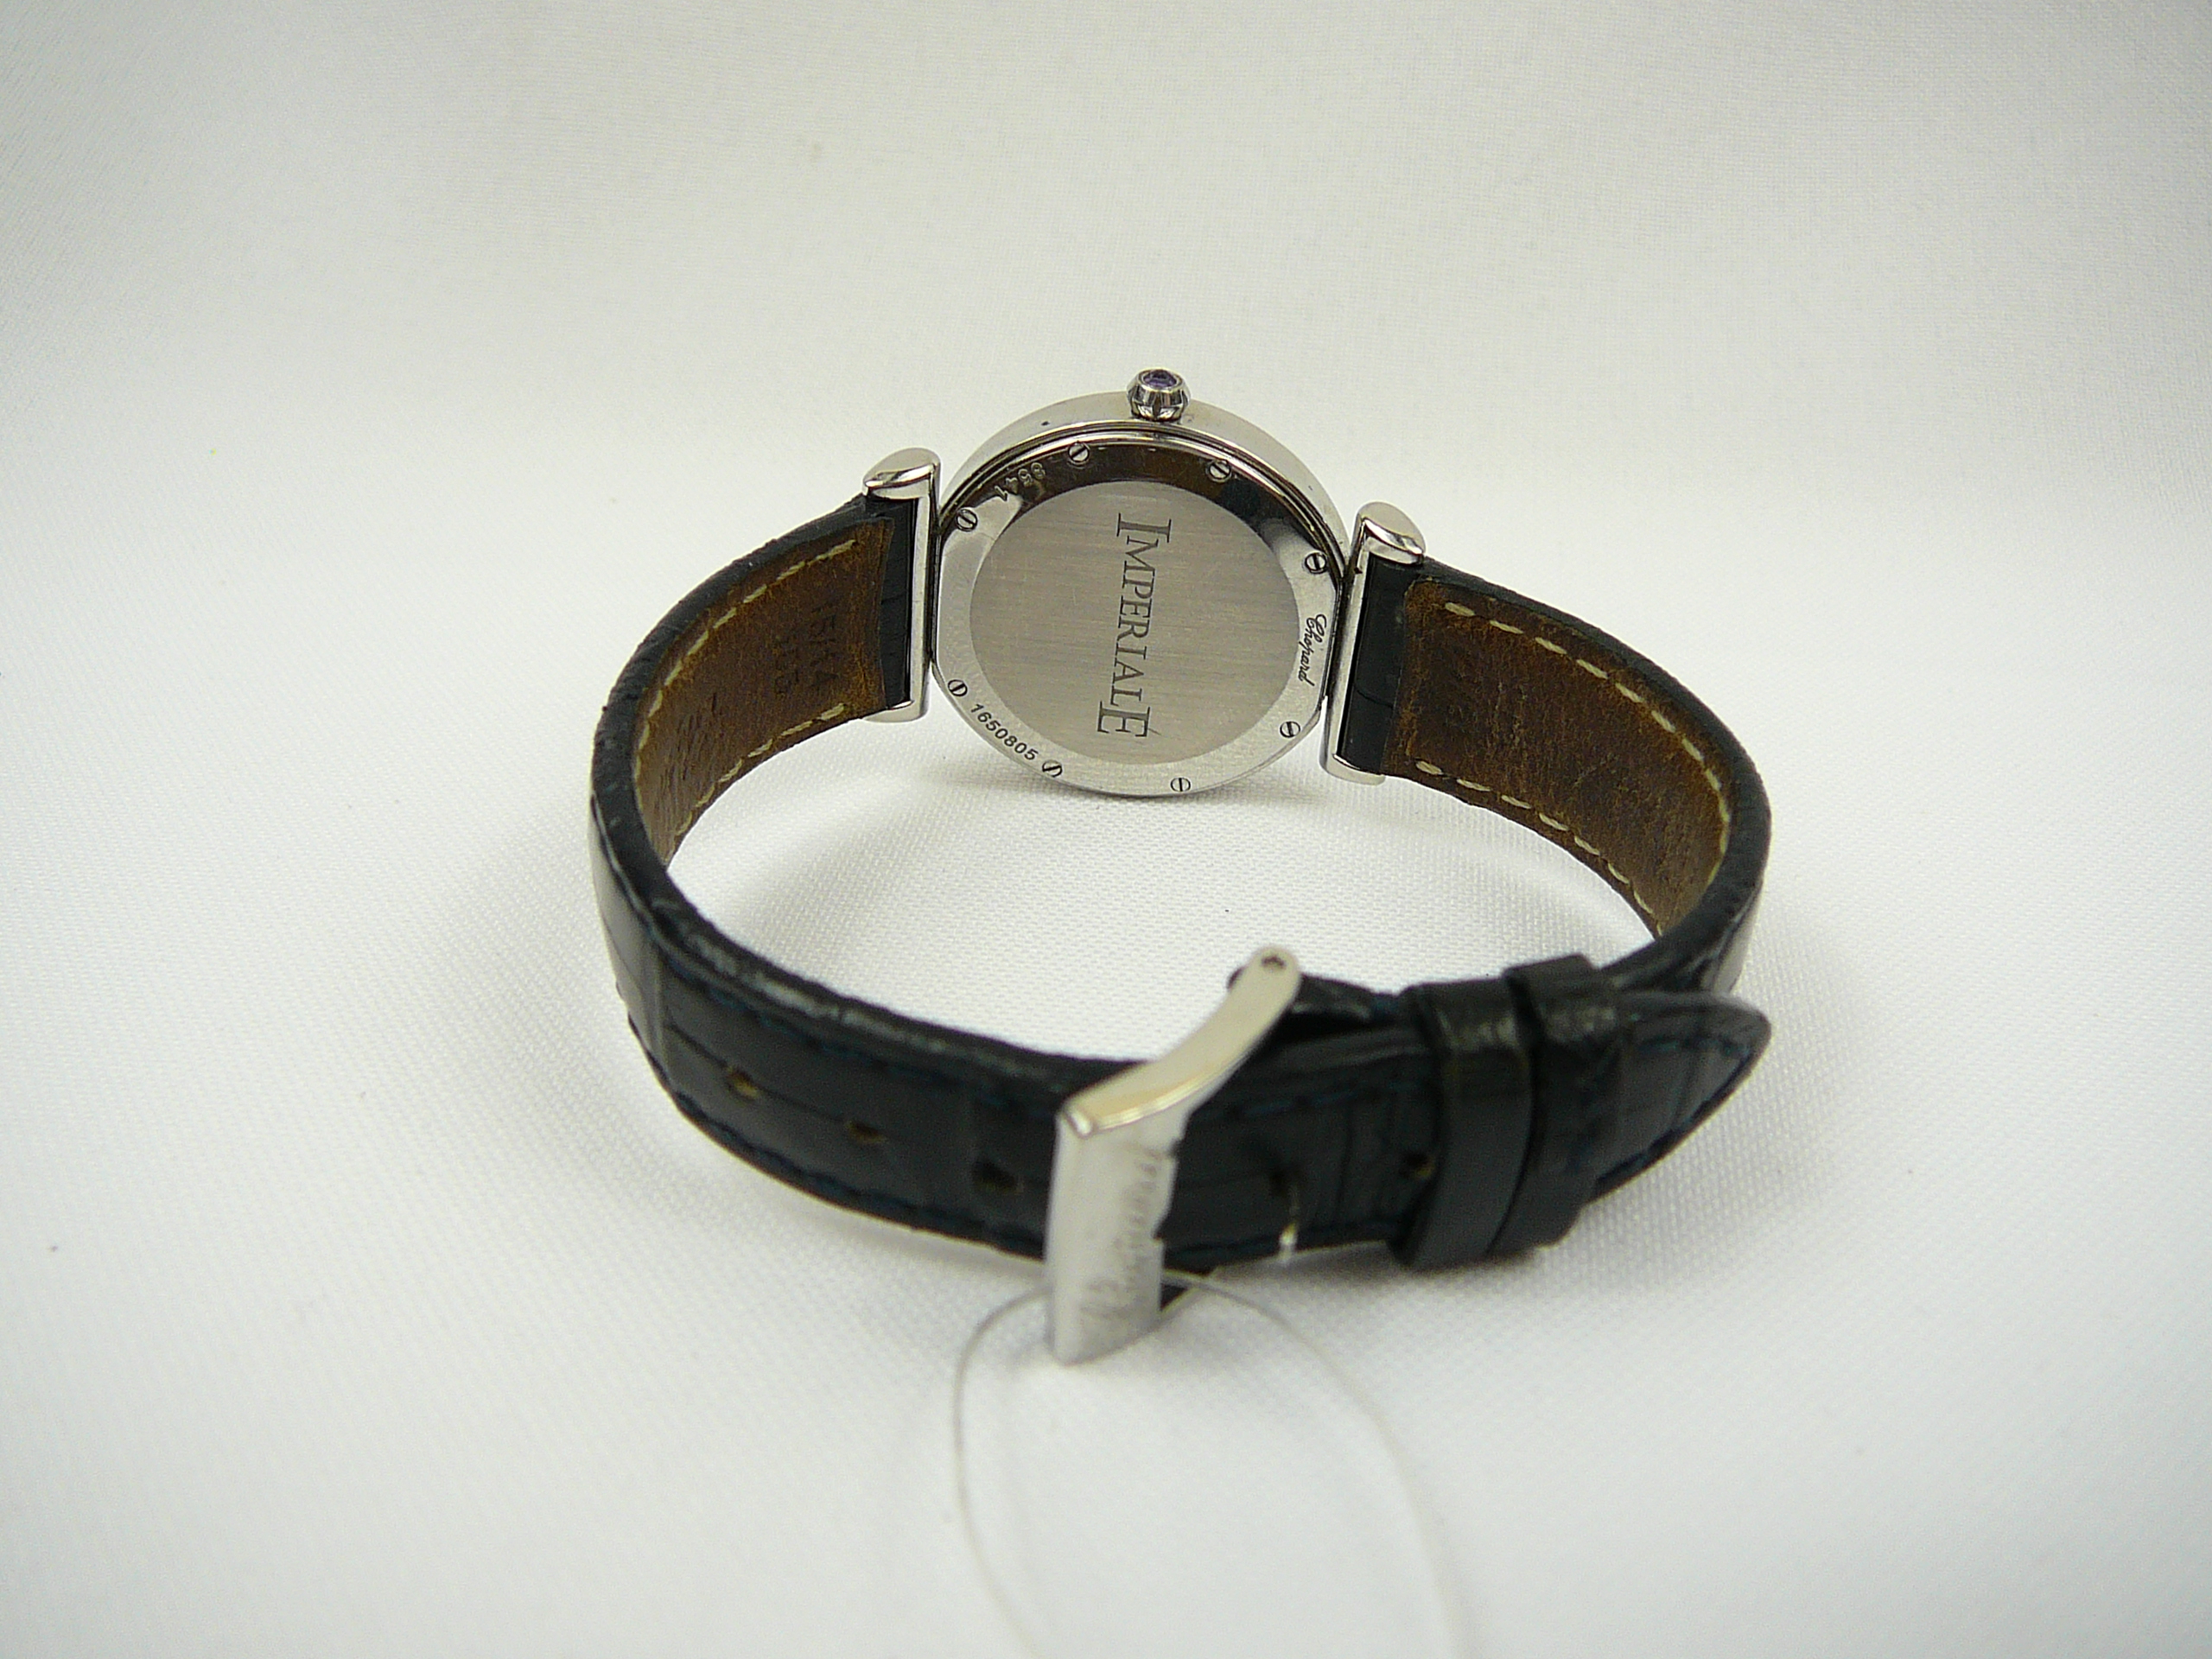 Ladies Chopard wrist watch - Image 4 of 5